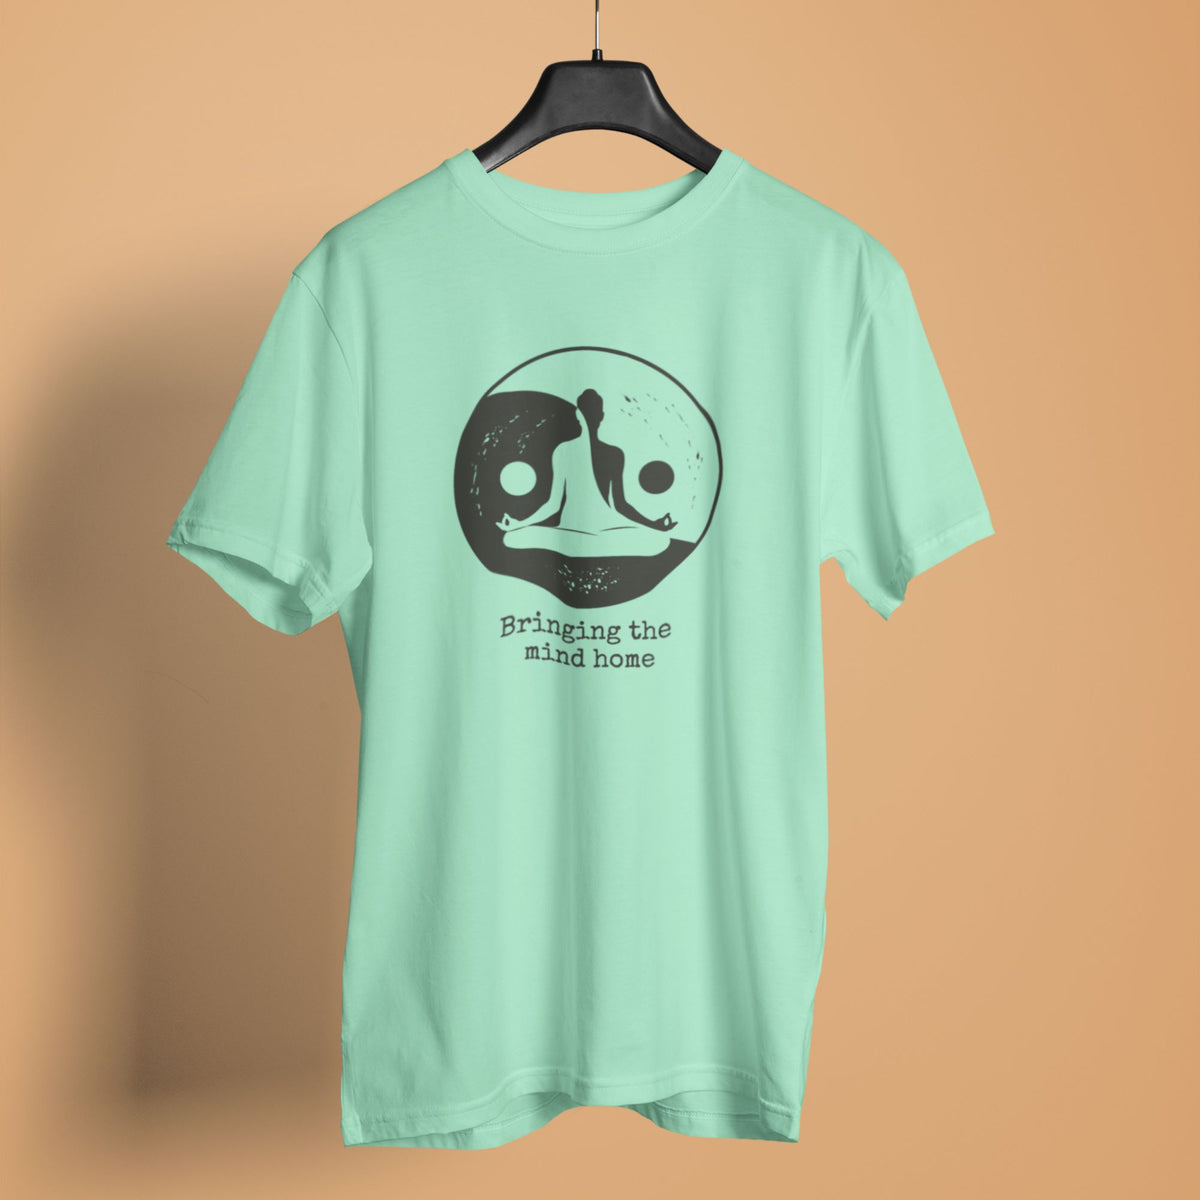 Customized Yoga T-shirts, Men and Women Yoga T-Shirts